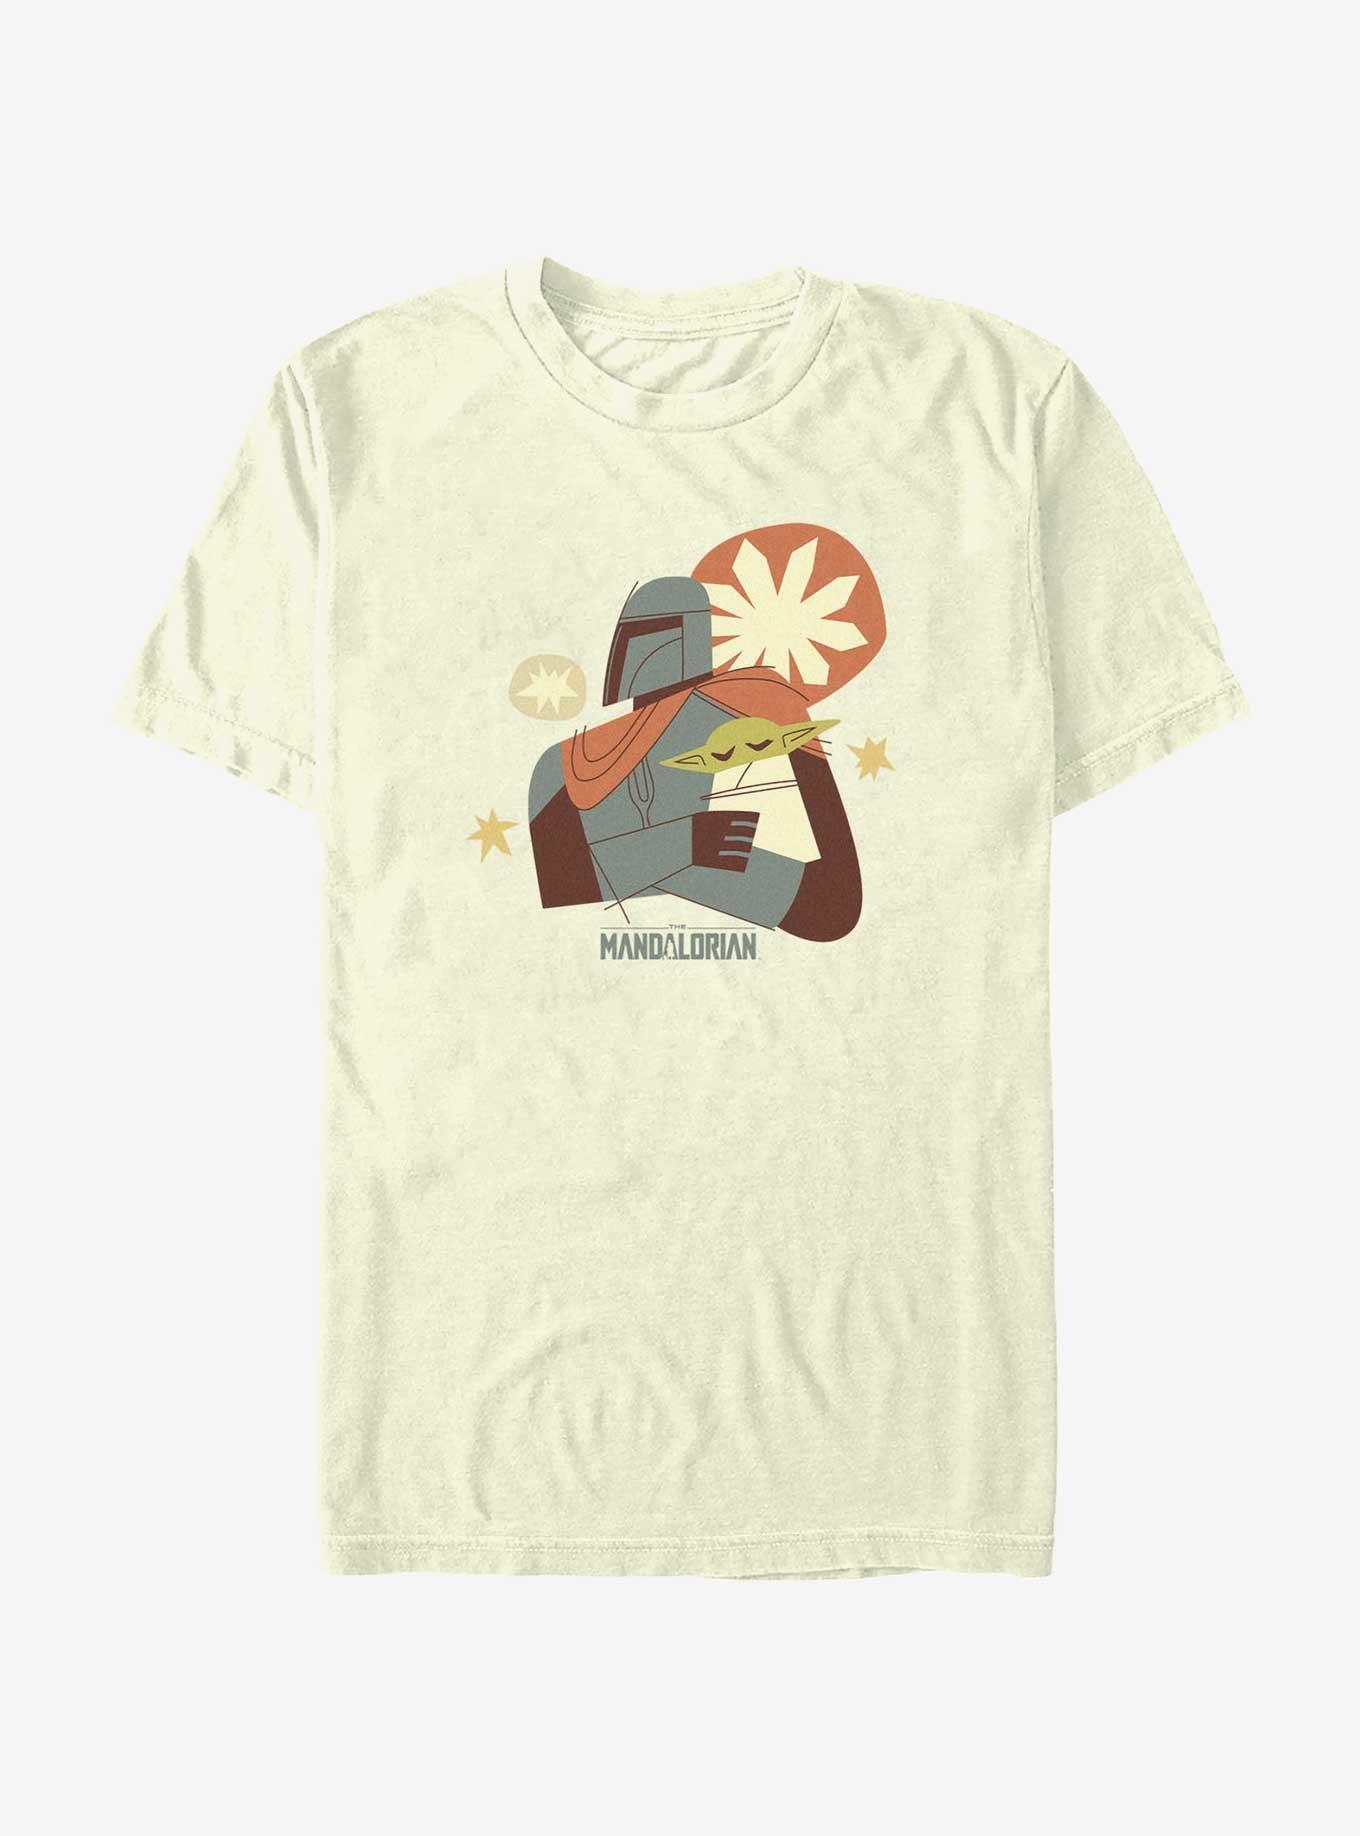 Star Wars The Mandalorian Mando & Sleepy Grogu Sketch T-Shirt